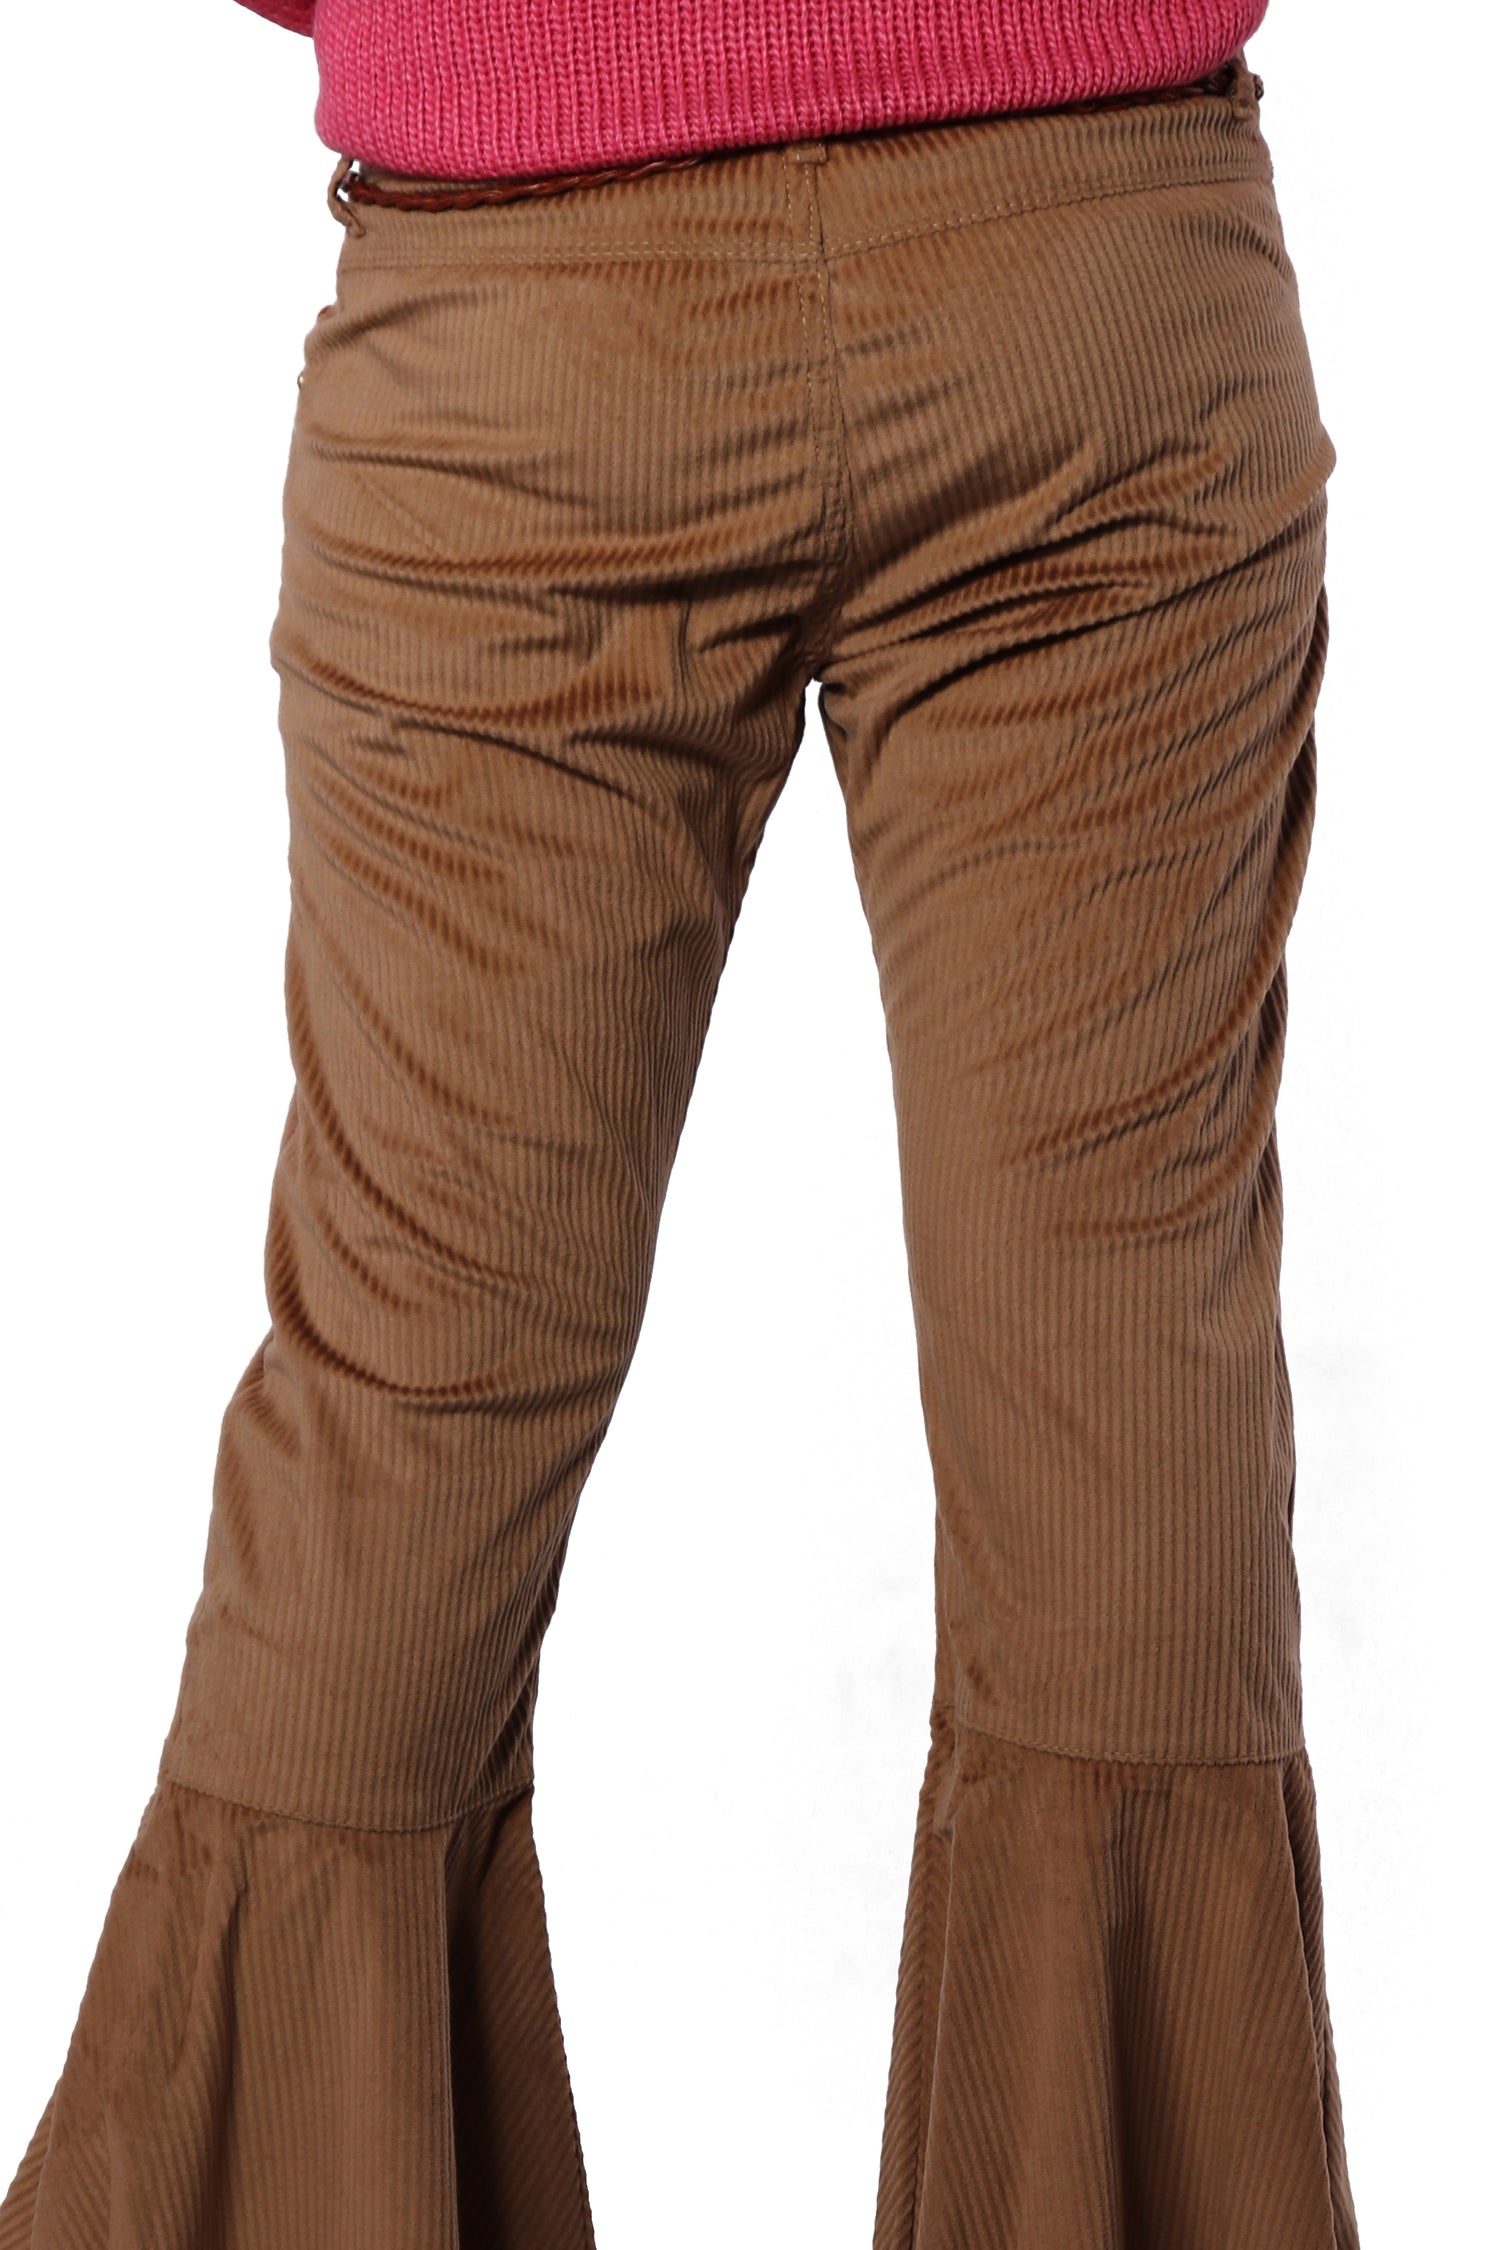 BEN SILVER CHARLESTON Men's Casual Dress Corduroy Pants Trousers Italy  Size 33 | eBay